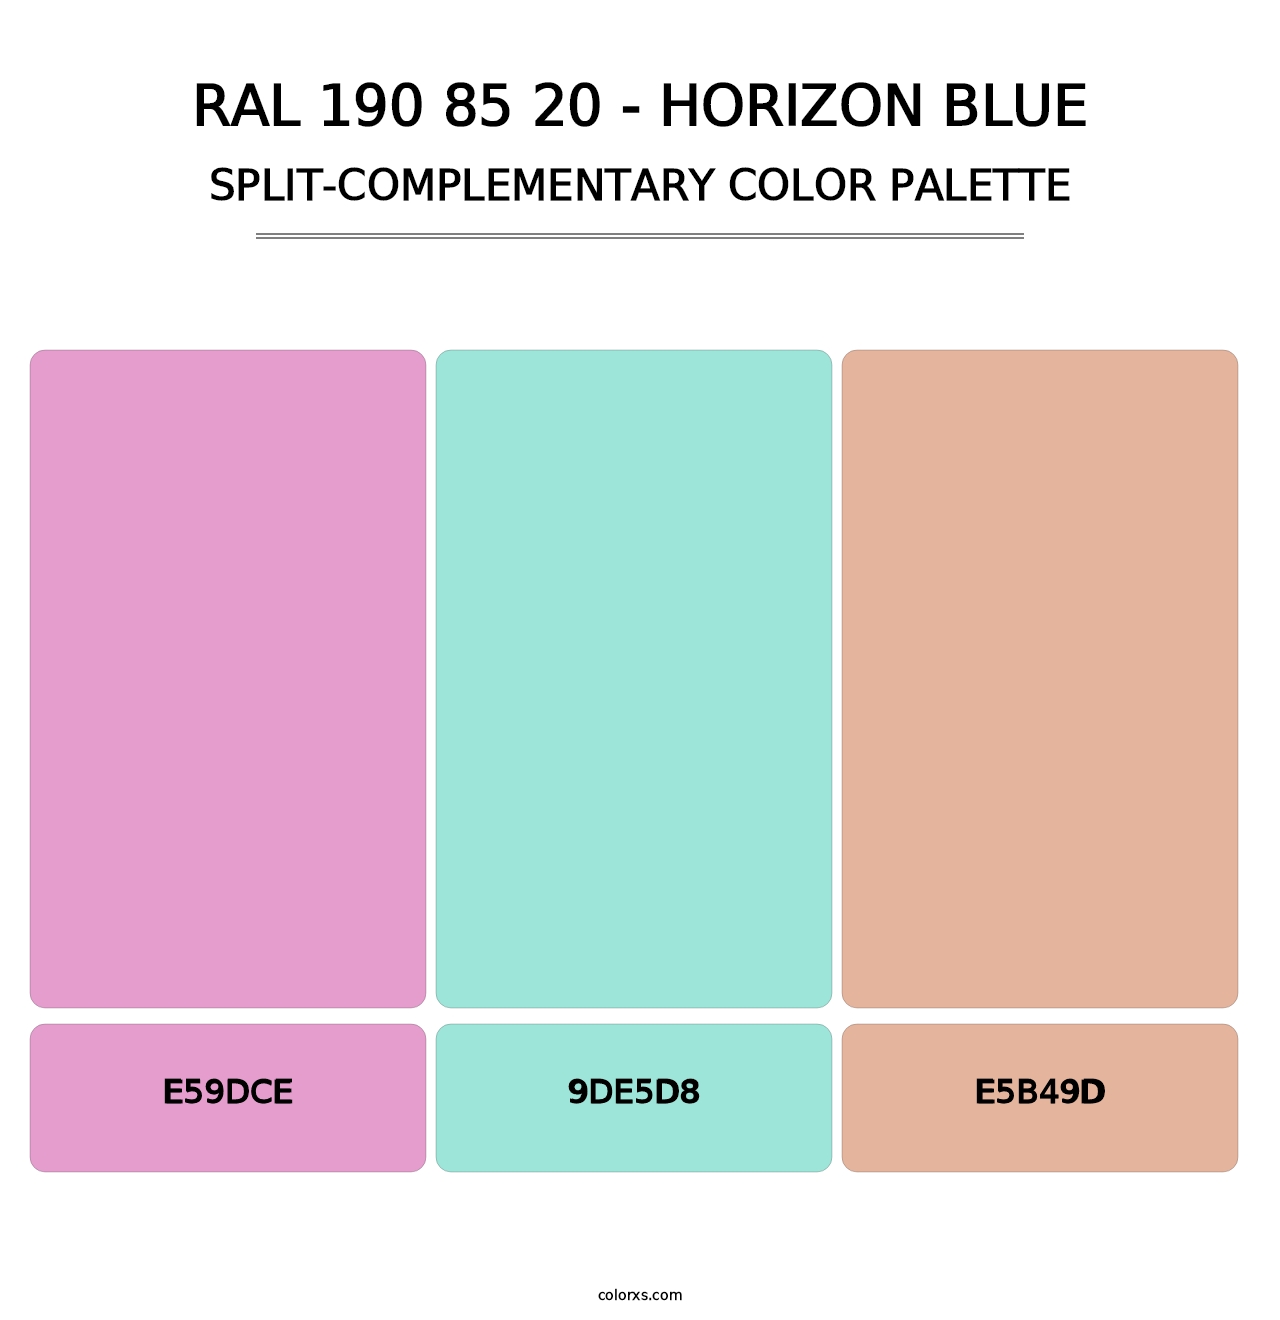 RAL 190 85 20 - Horizon Blue - Split-Complementary Color Palette